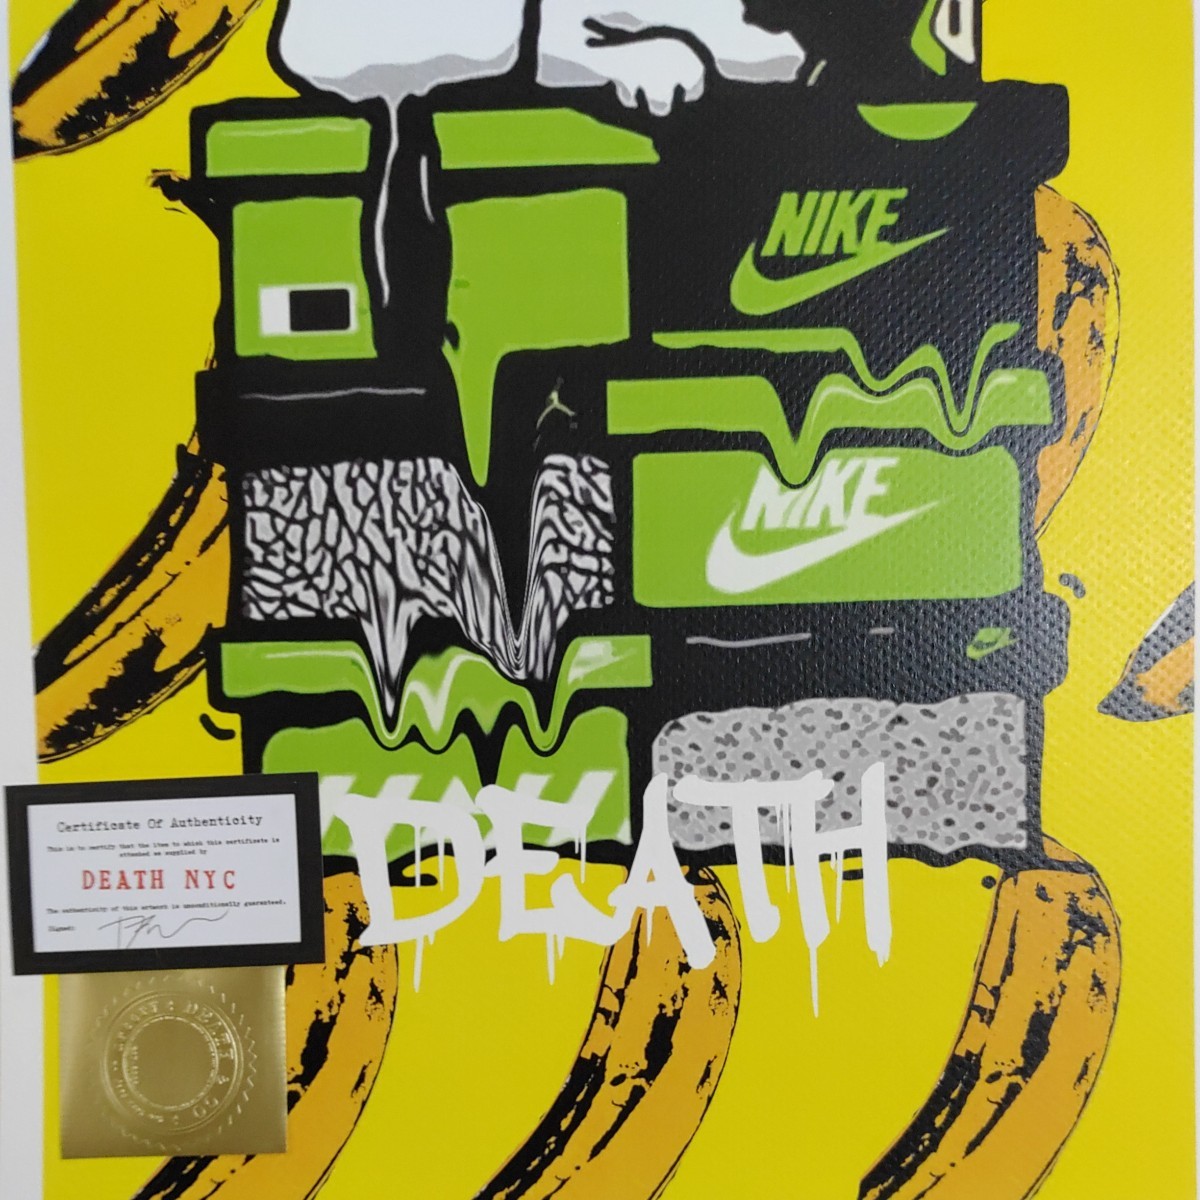 DEATH NYC 世界限定100枚 アートポスター スヌーピー SNOOPY ナイキ NIKE Andy Warhol アンディ ウォーホル Banana 現代アートの画像3